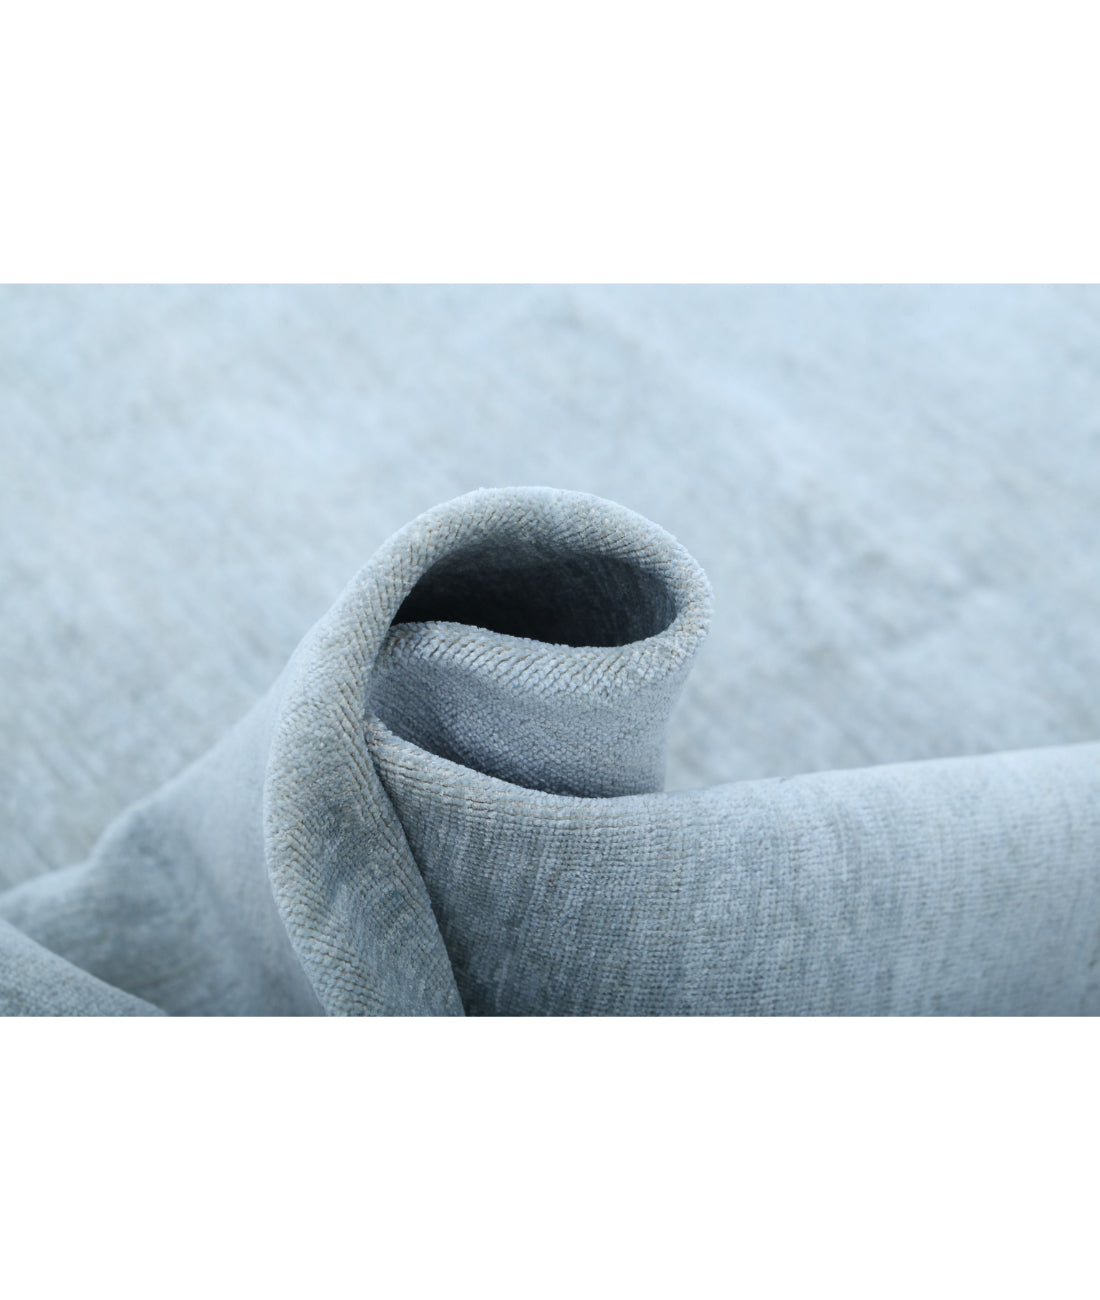 Hand Knotted Overdye Wool Rug - 6'1'' x 8'4'' 6'1'' x 8'4'' (183 X 250) / Grey / Grey